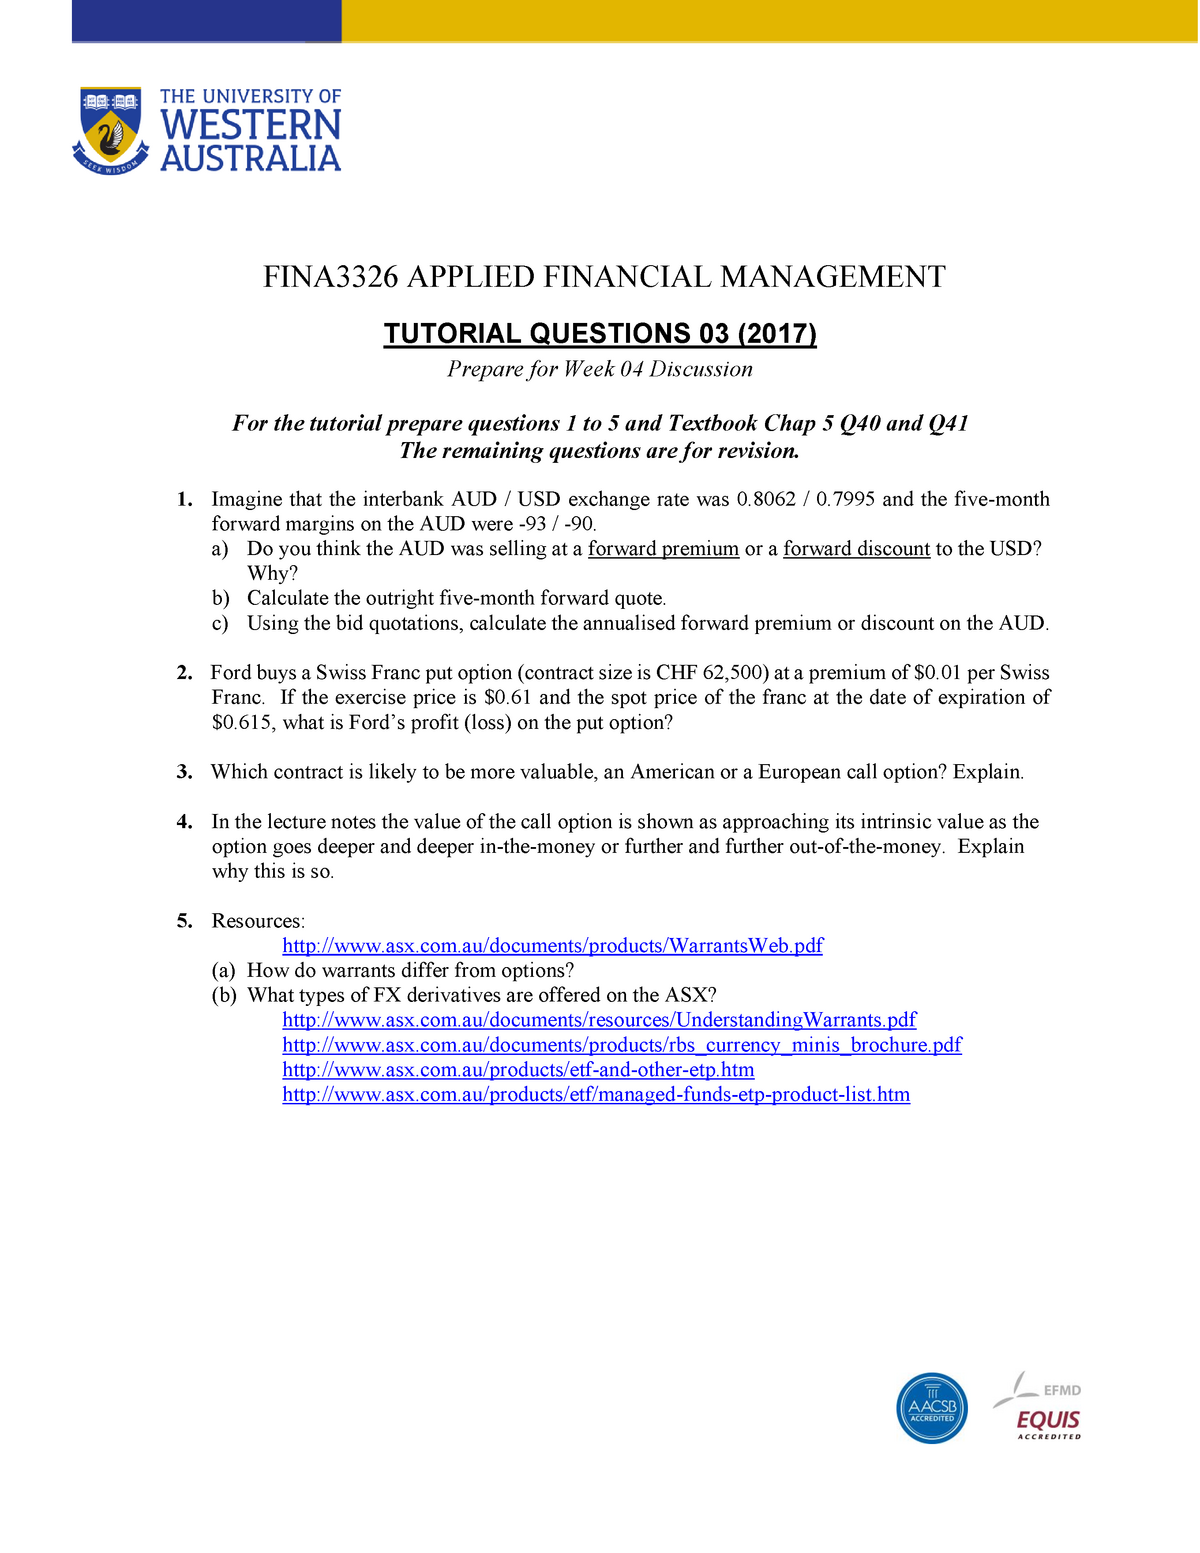 Tutorial Questions 03 2017 Fina3326 Applied Financial Management - 